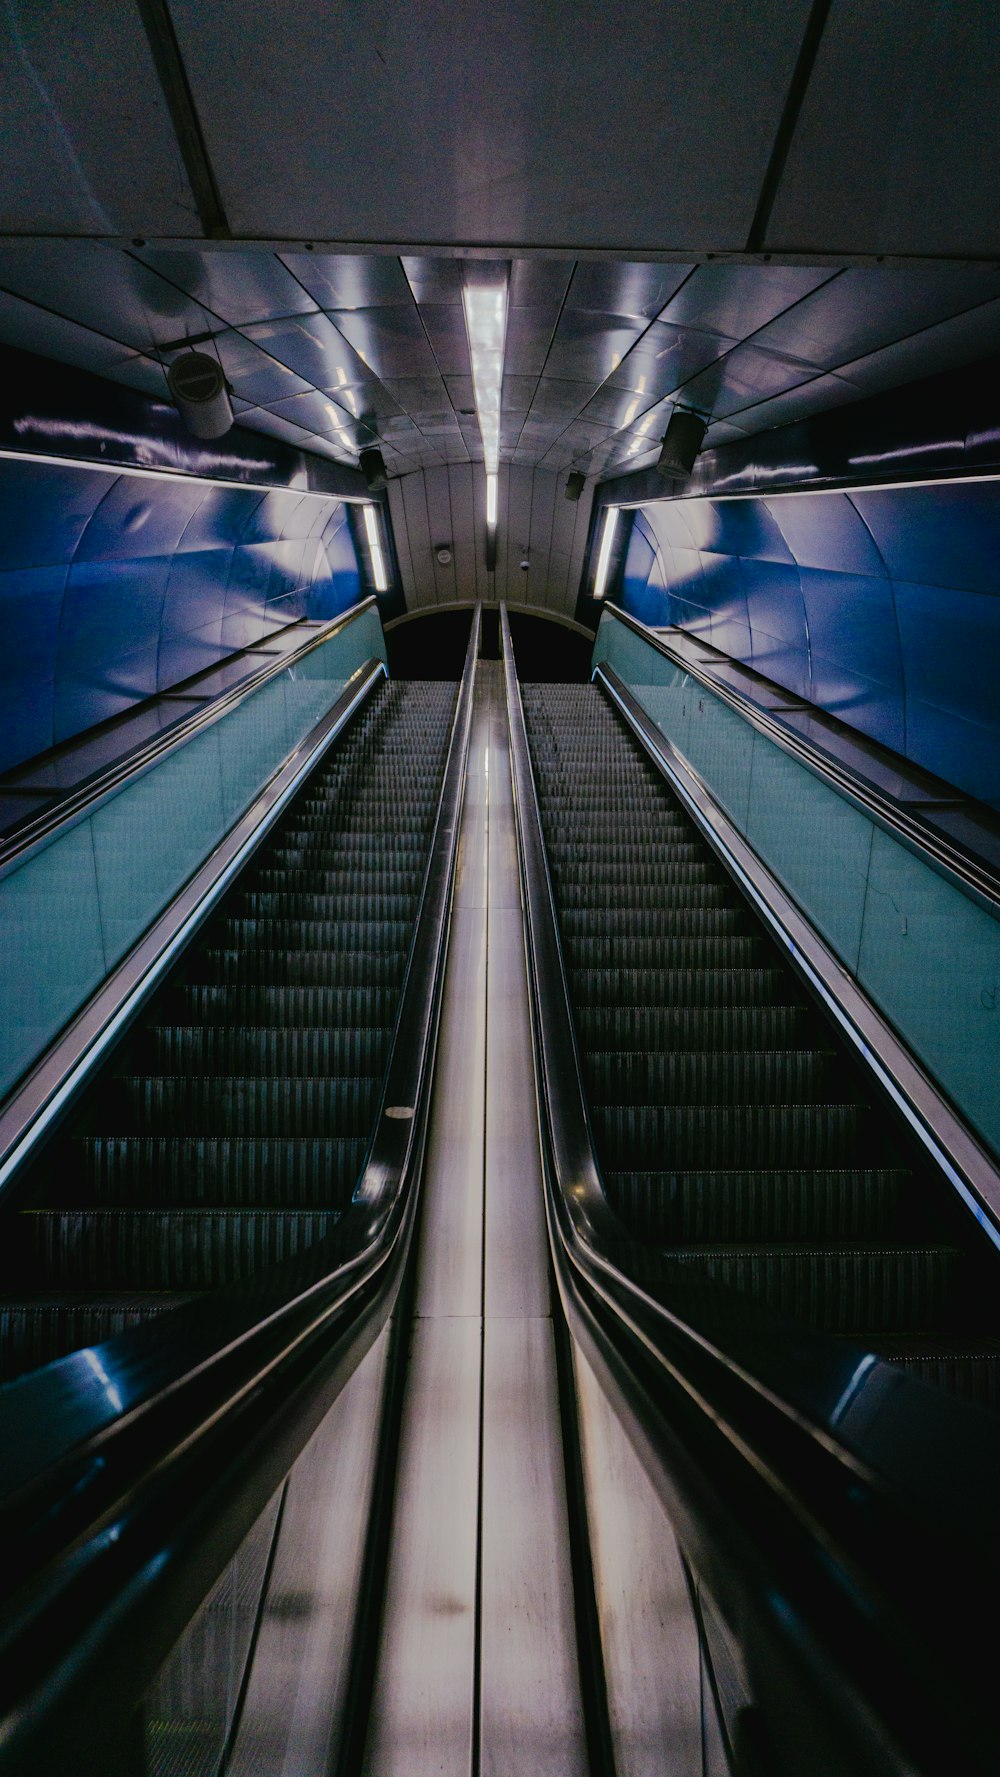 a long escalator in a building